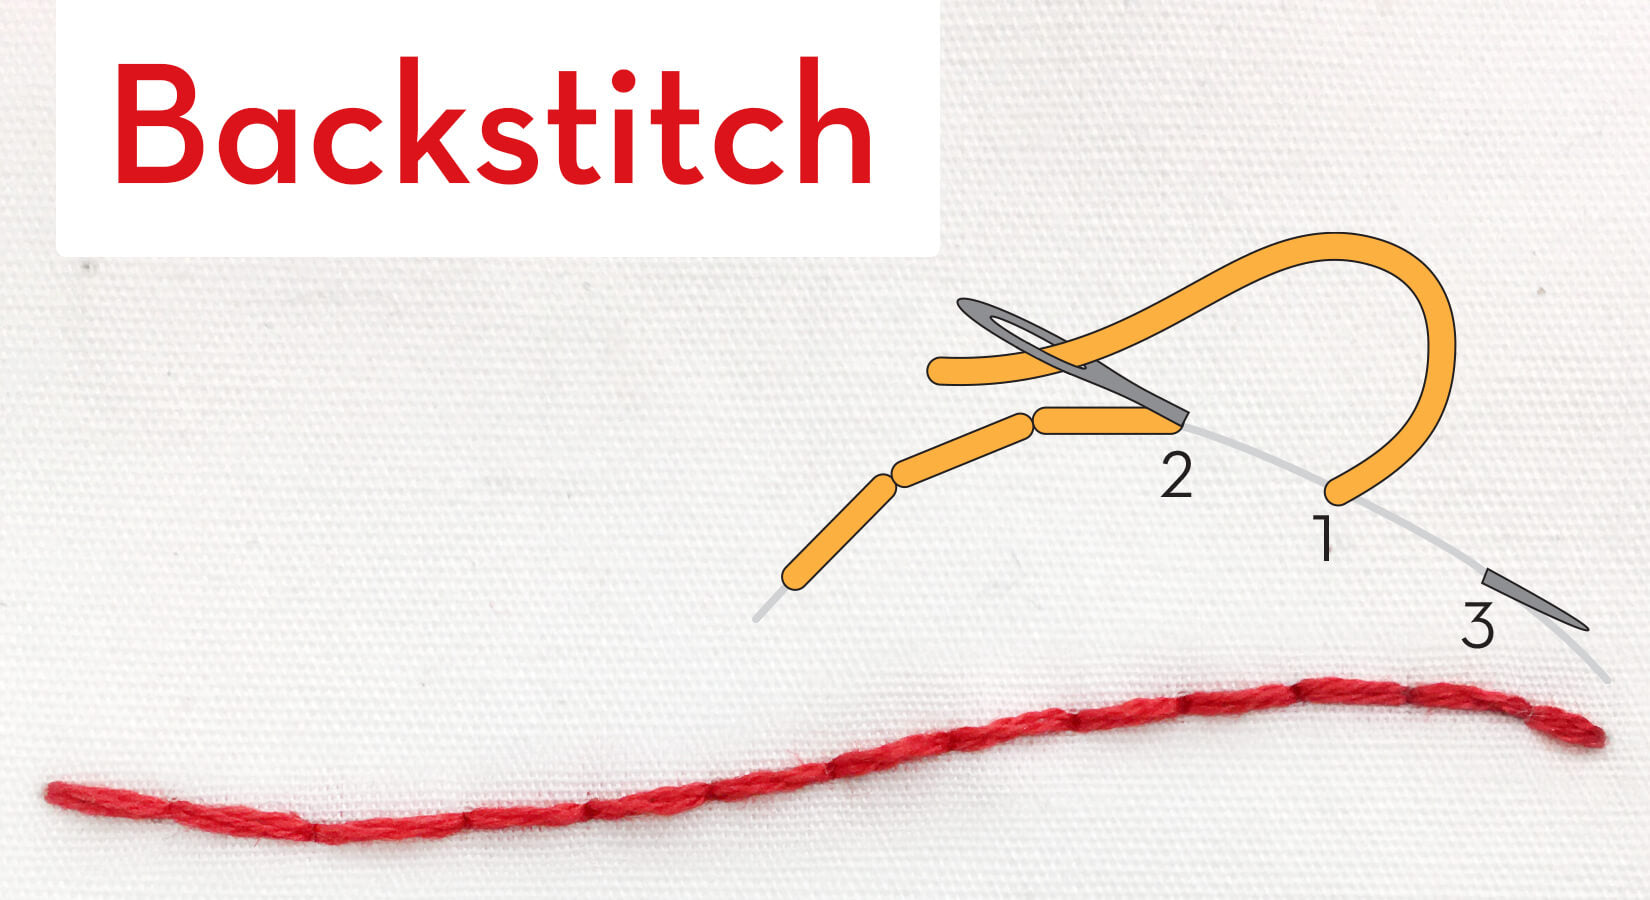 backstitch - embroidery stitches